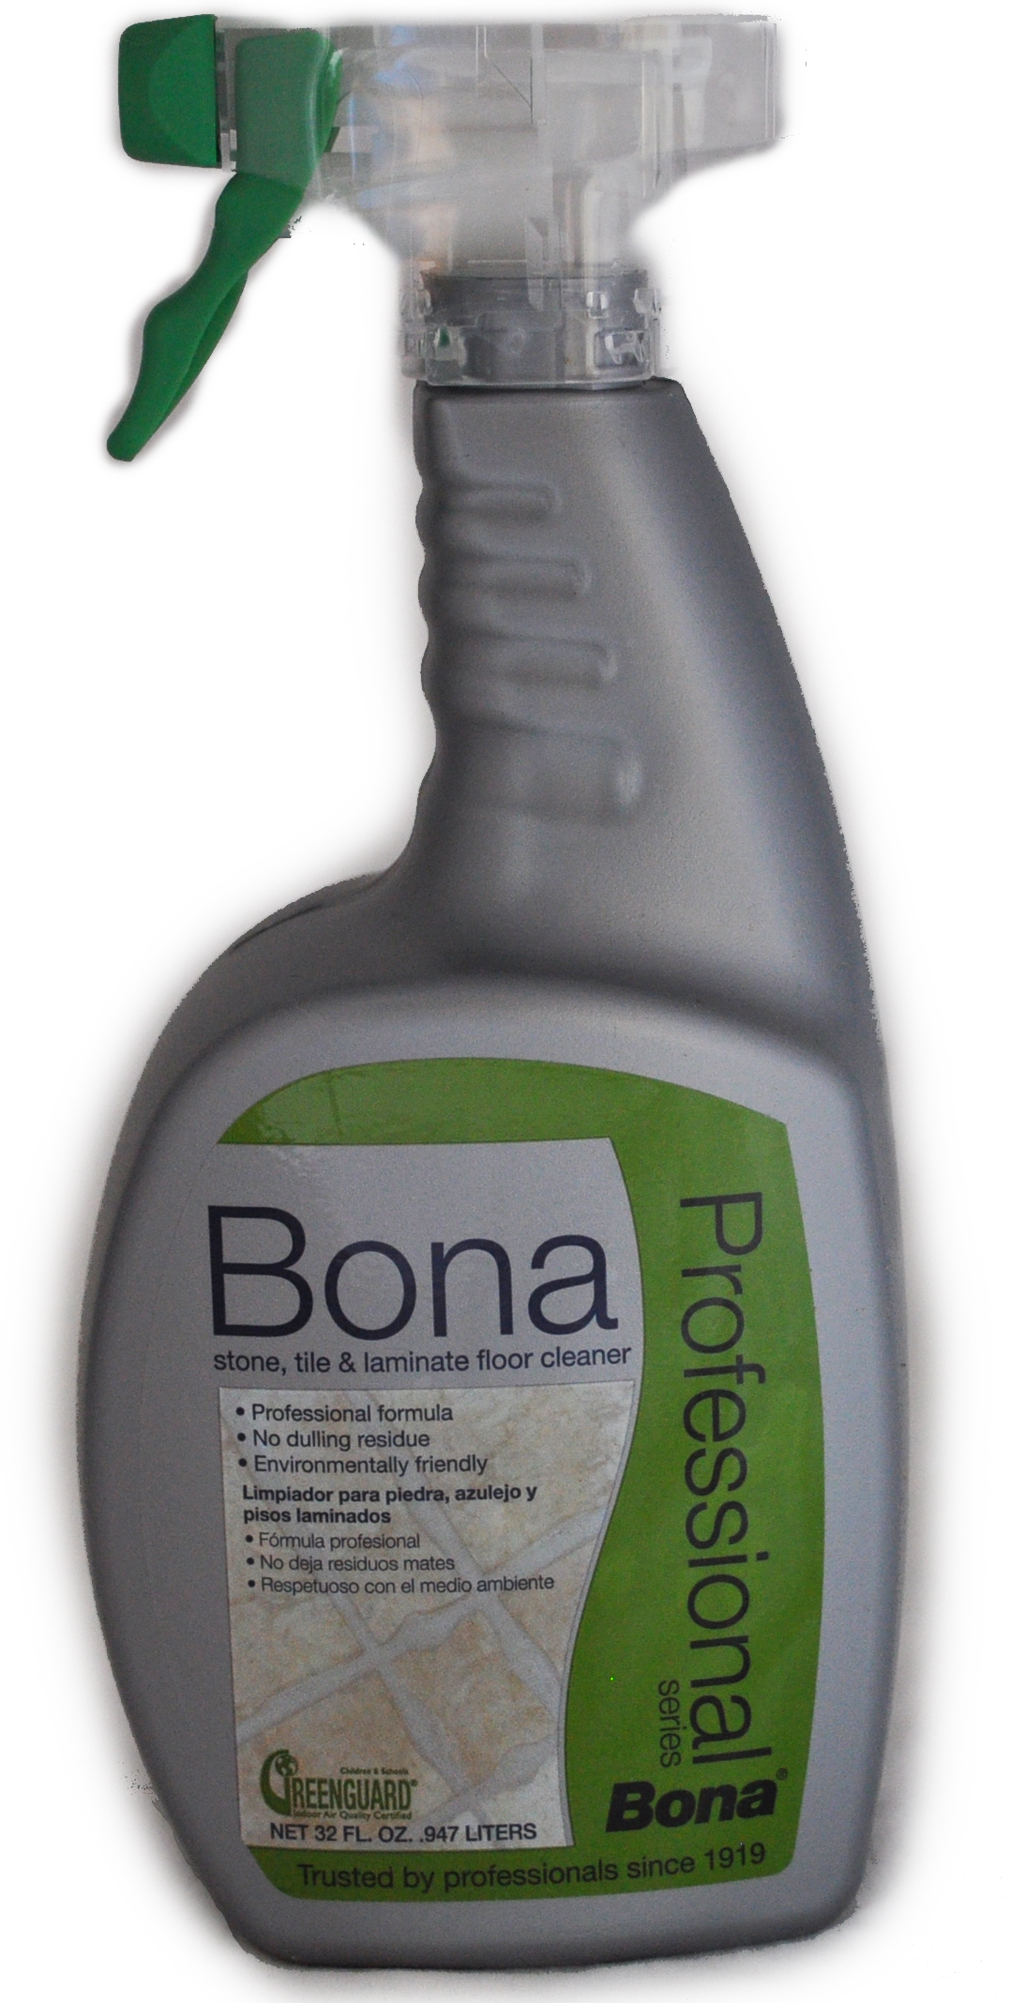 Bona Professional Series Stone, Tile & Laminate Floor Cleaner in 32 oz Spray Bottle